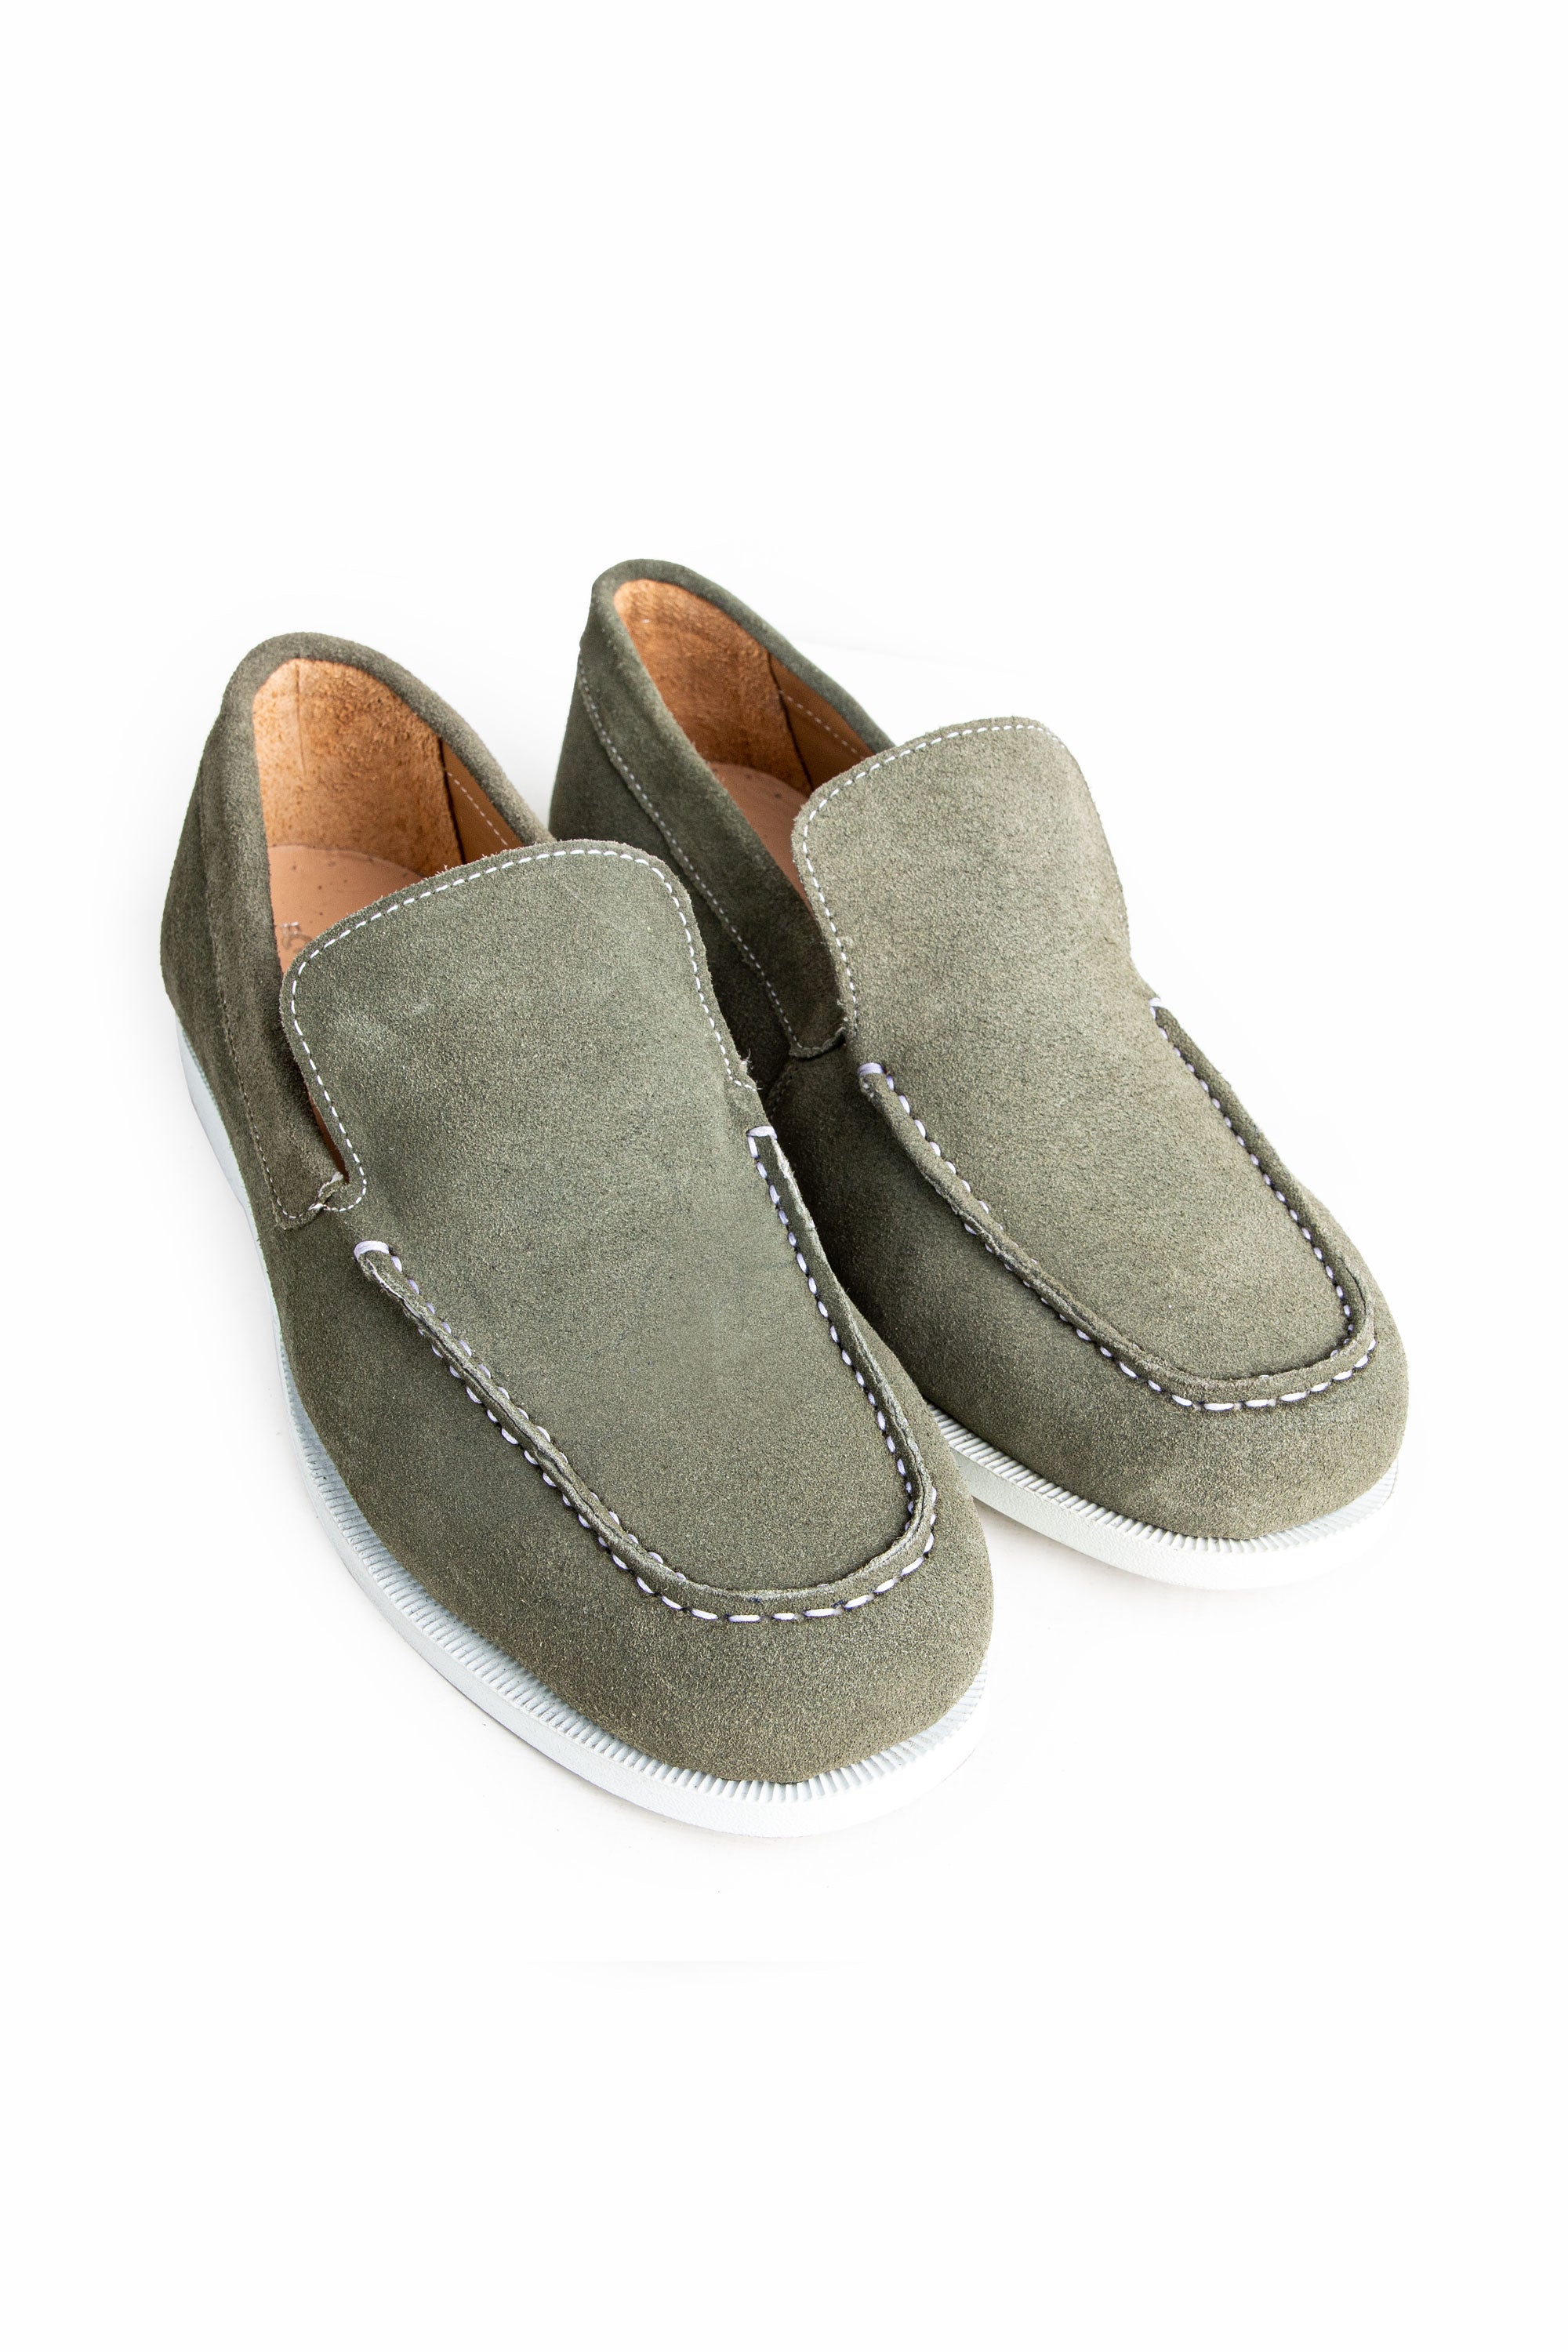 Olive Men's Shoes